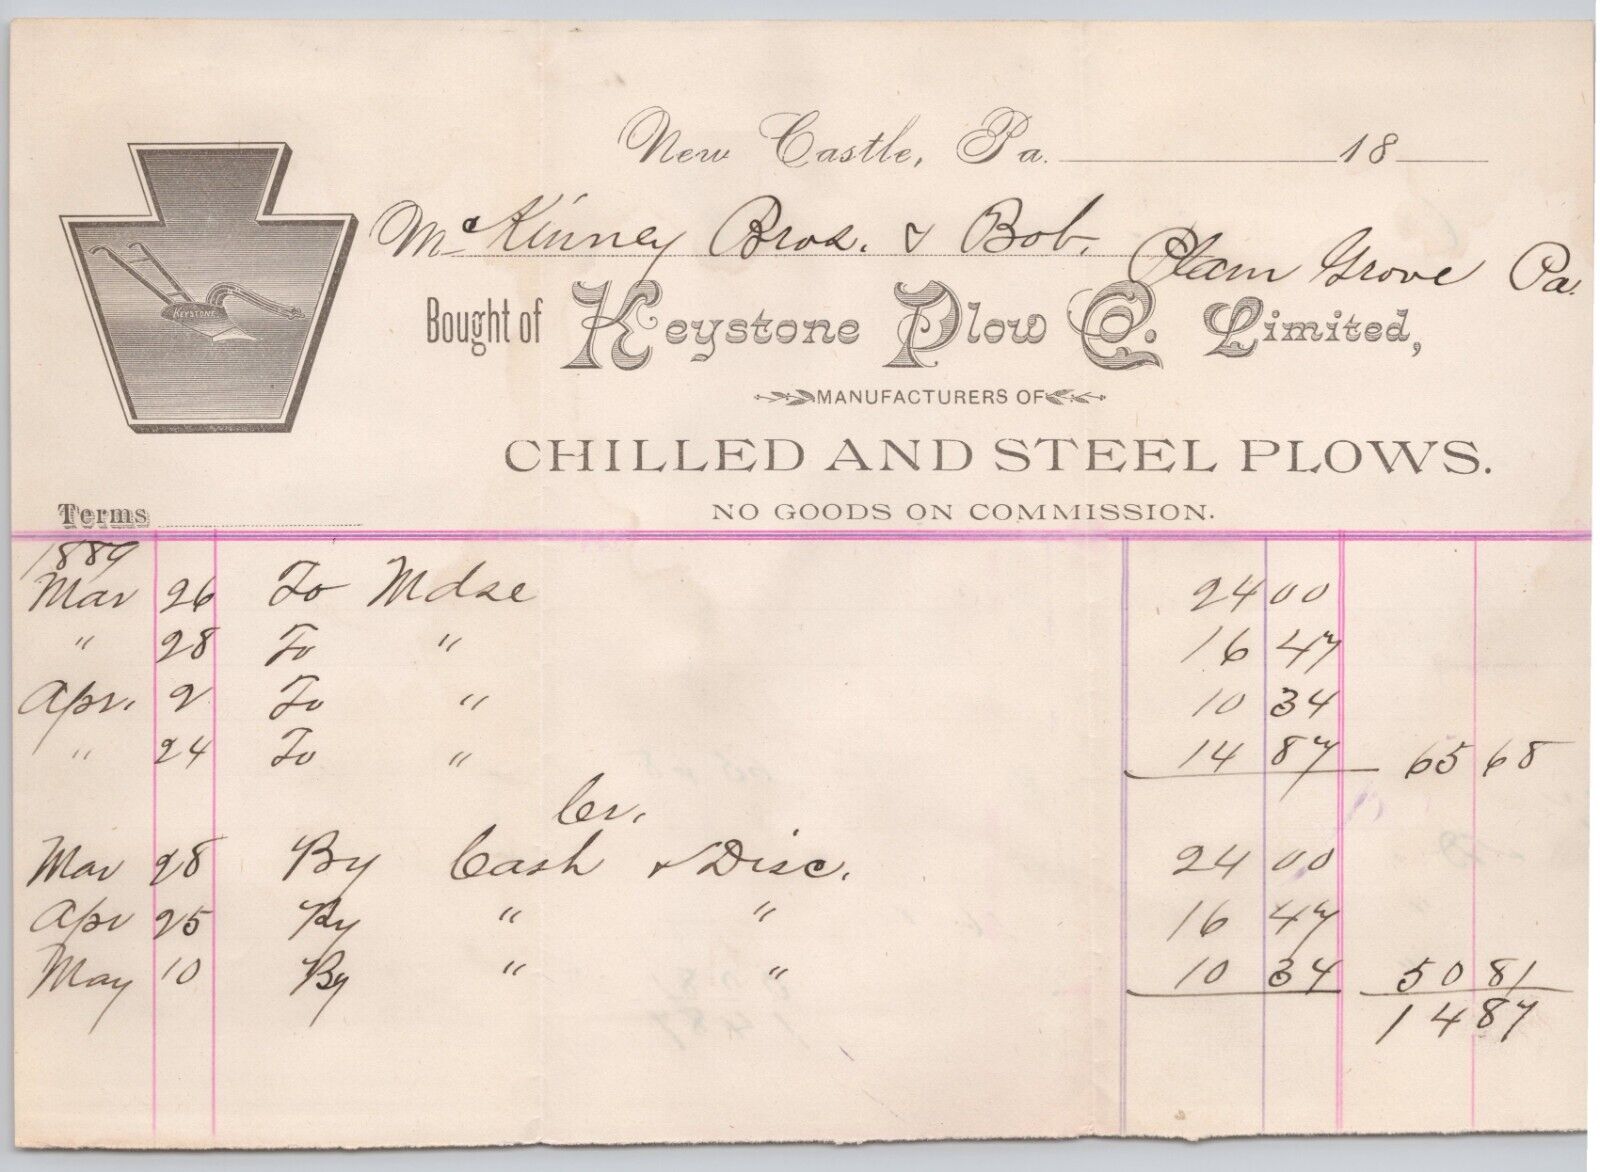 Illustrated Keystone Plow Co. New Castle PA Billhead Letterhead 1889 BH1-9